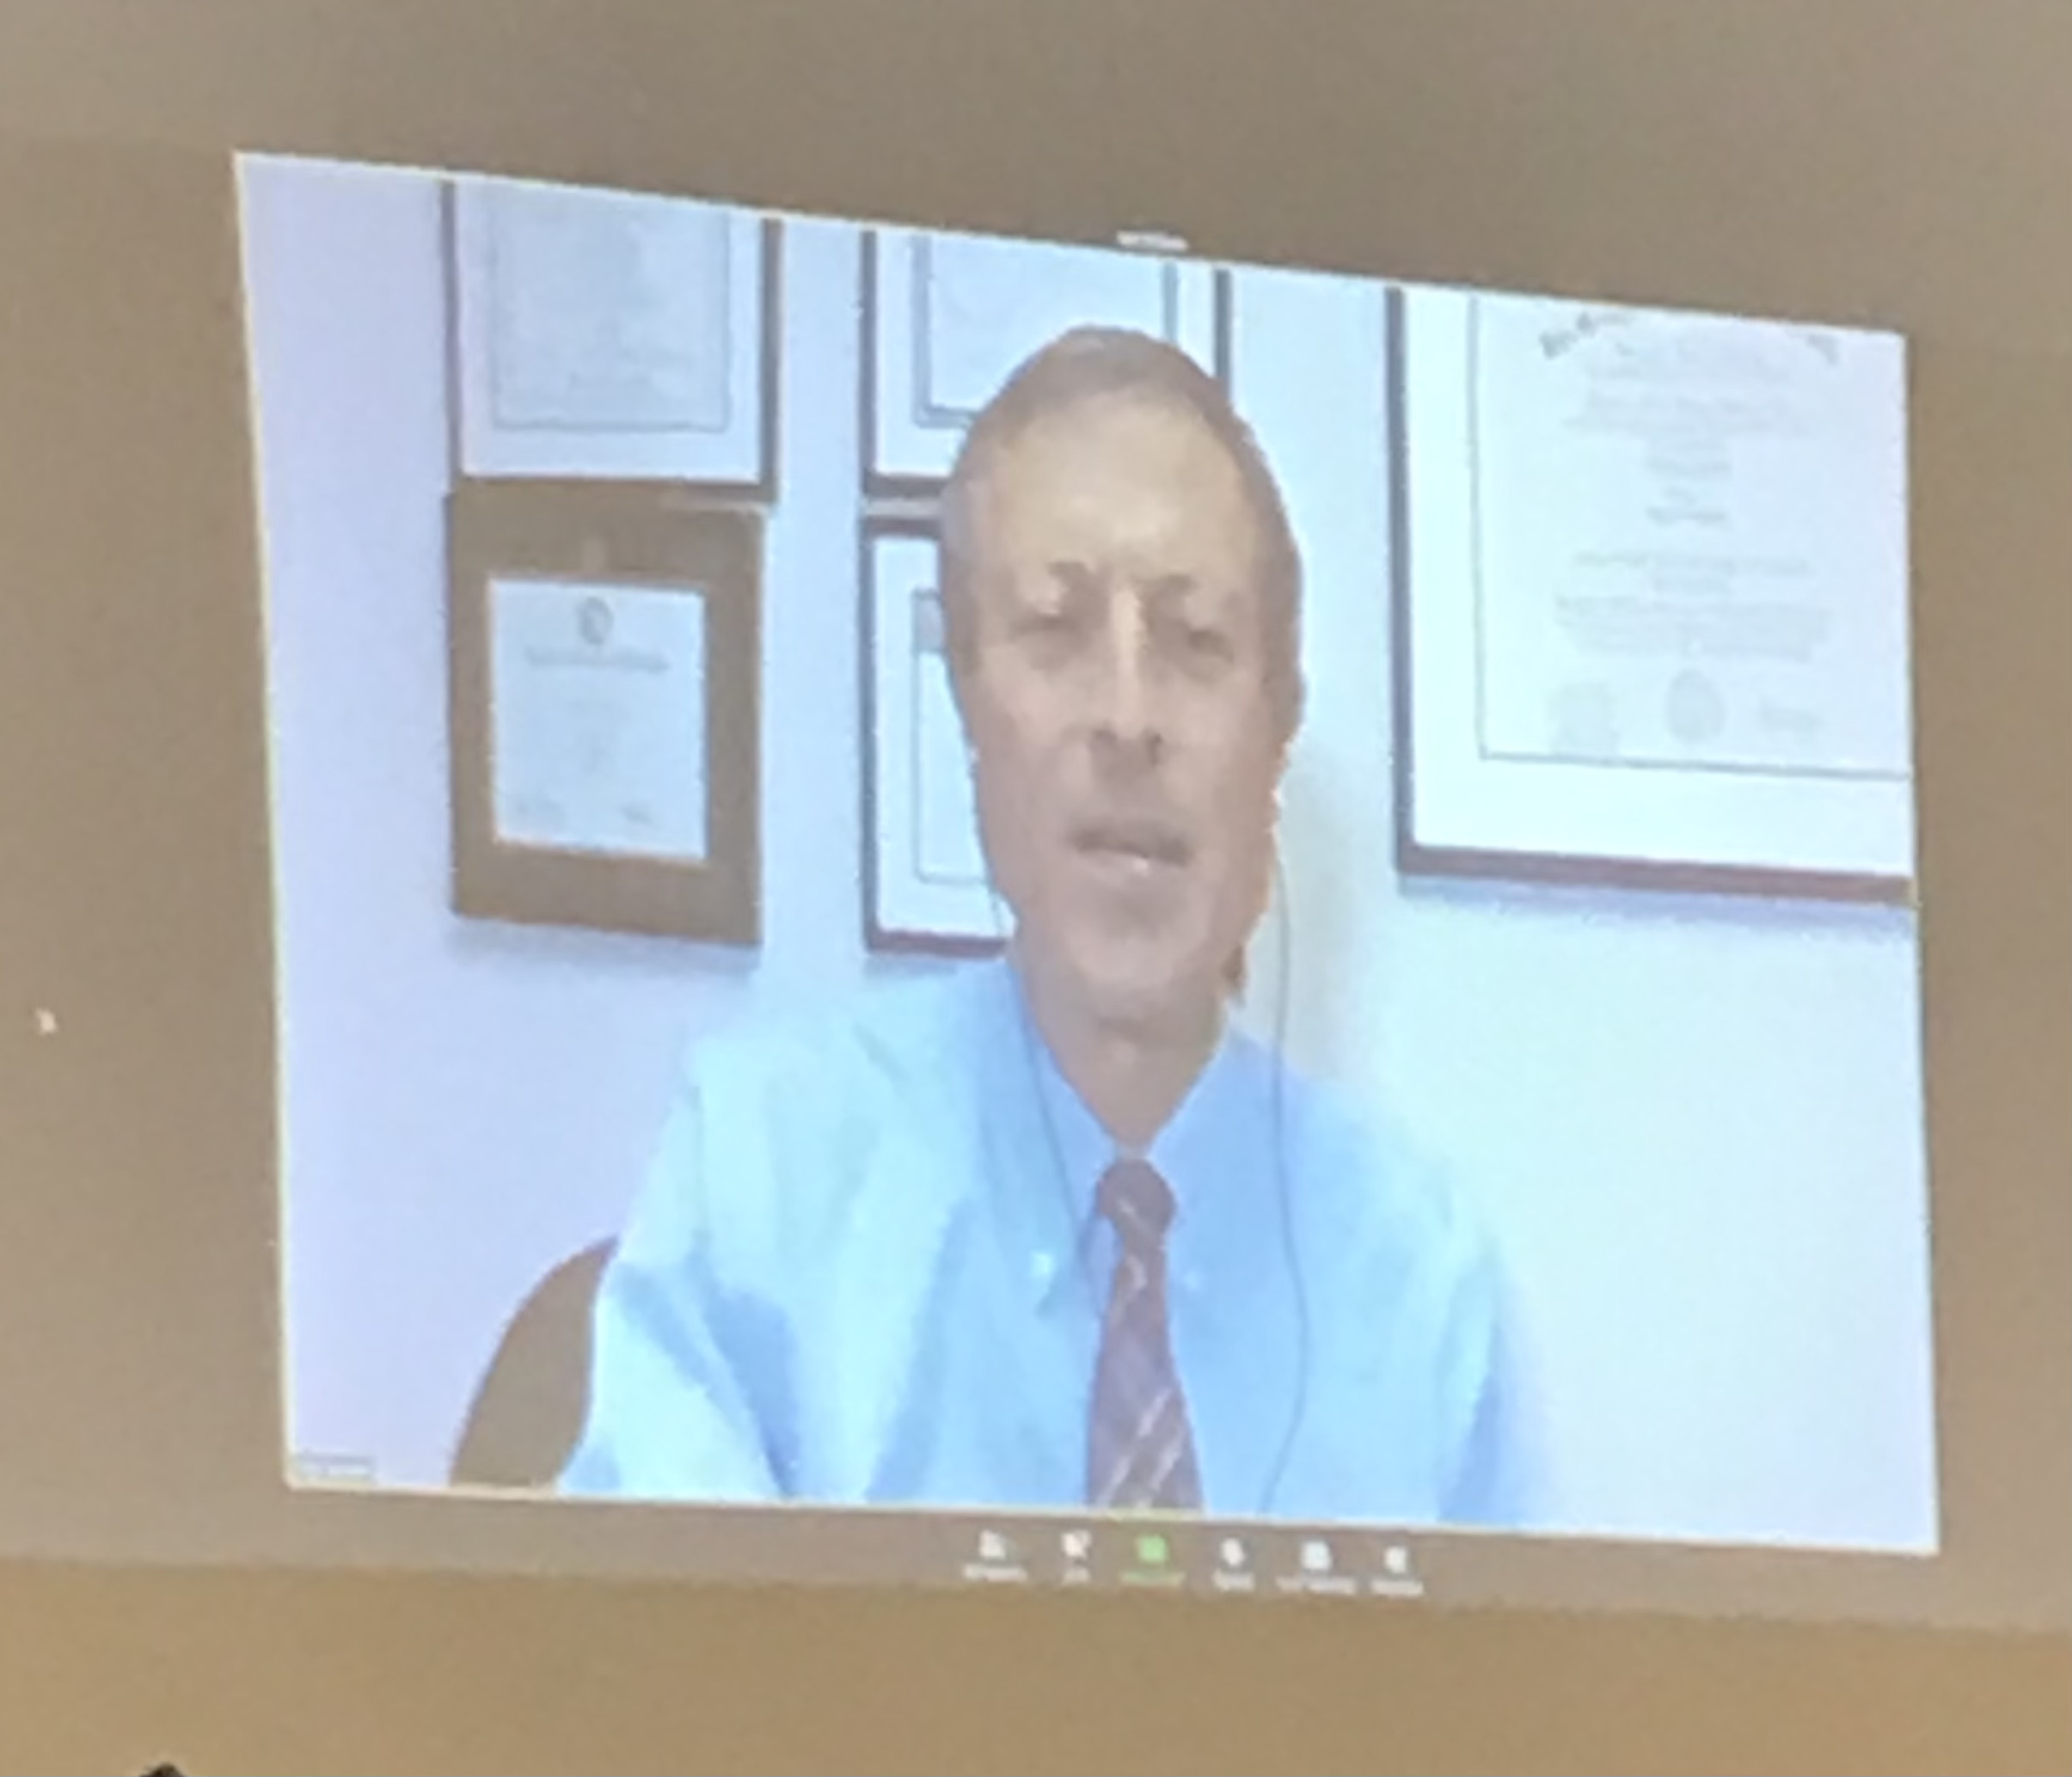 Dr. Neal Barnard's virtual presentation